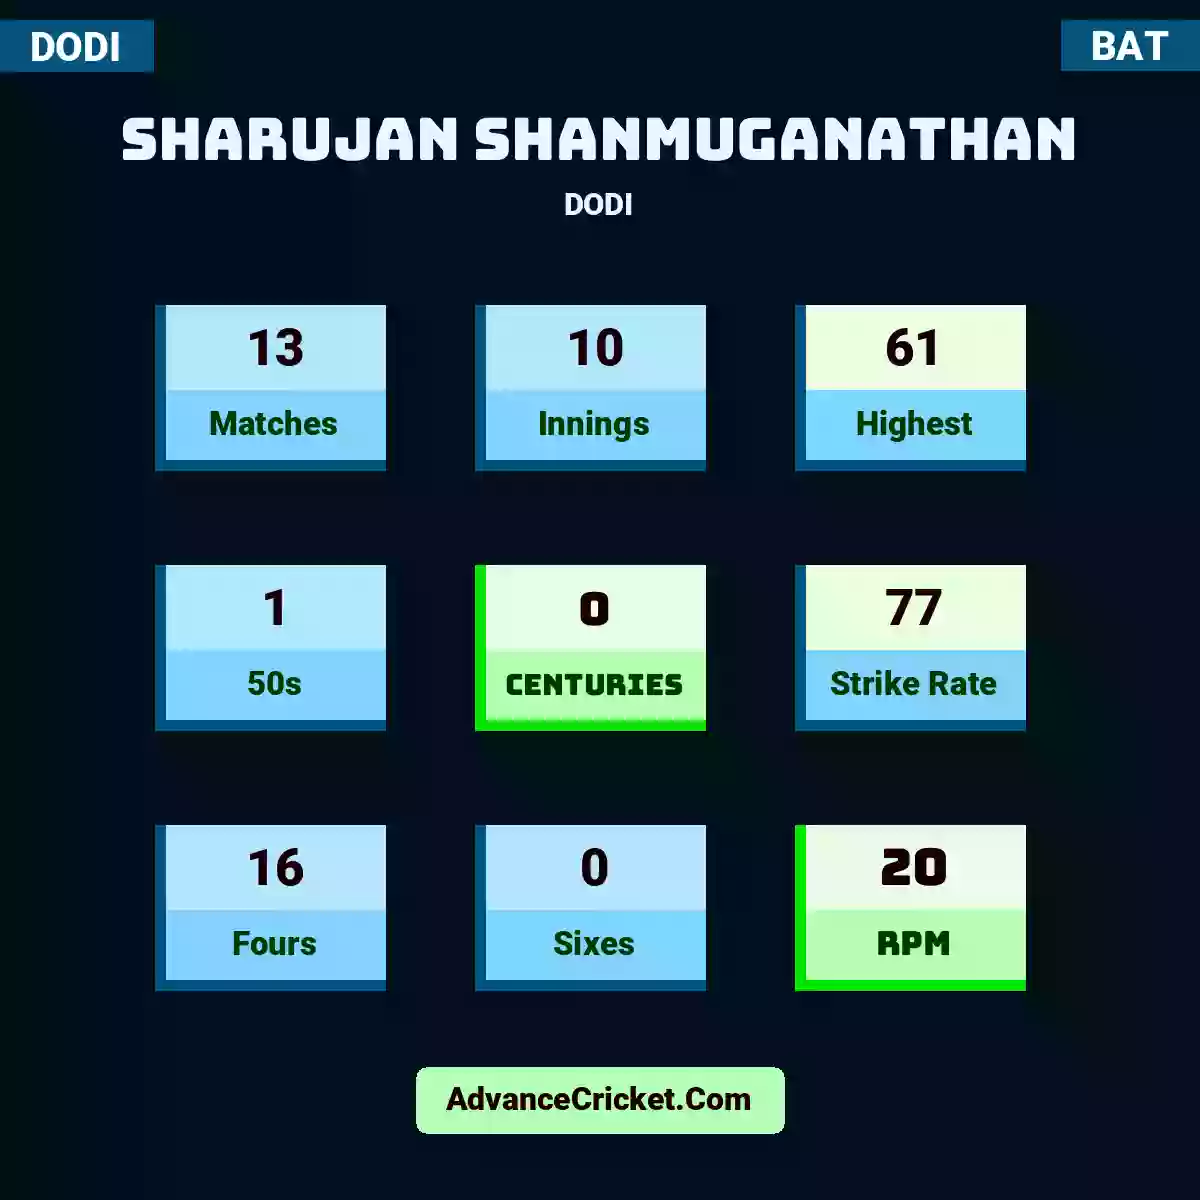 Sharujan Shanmuganathan DODI , Sharujan Shanmuganathan played 13 matches, scored 61 runs as highest, 1 half-centuries, and 0 centuries, with a strike rate of 77. S.Shanmuganathan hit 16 fours and 0 sixes, with an RPM of 20.